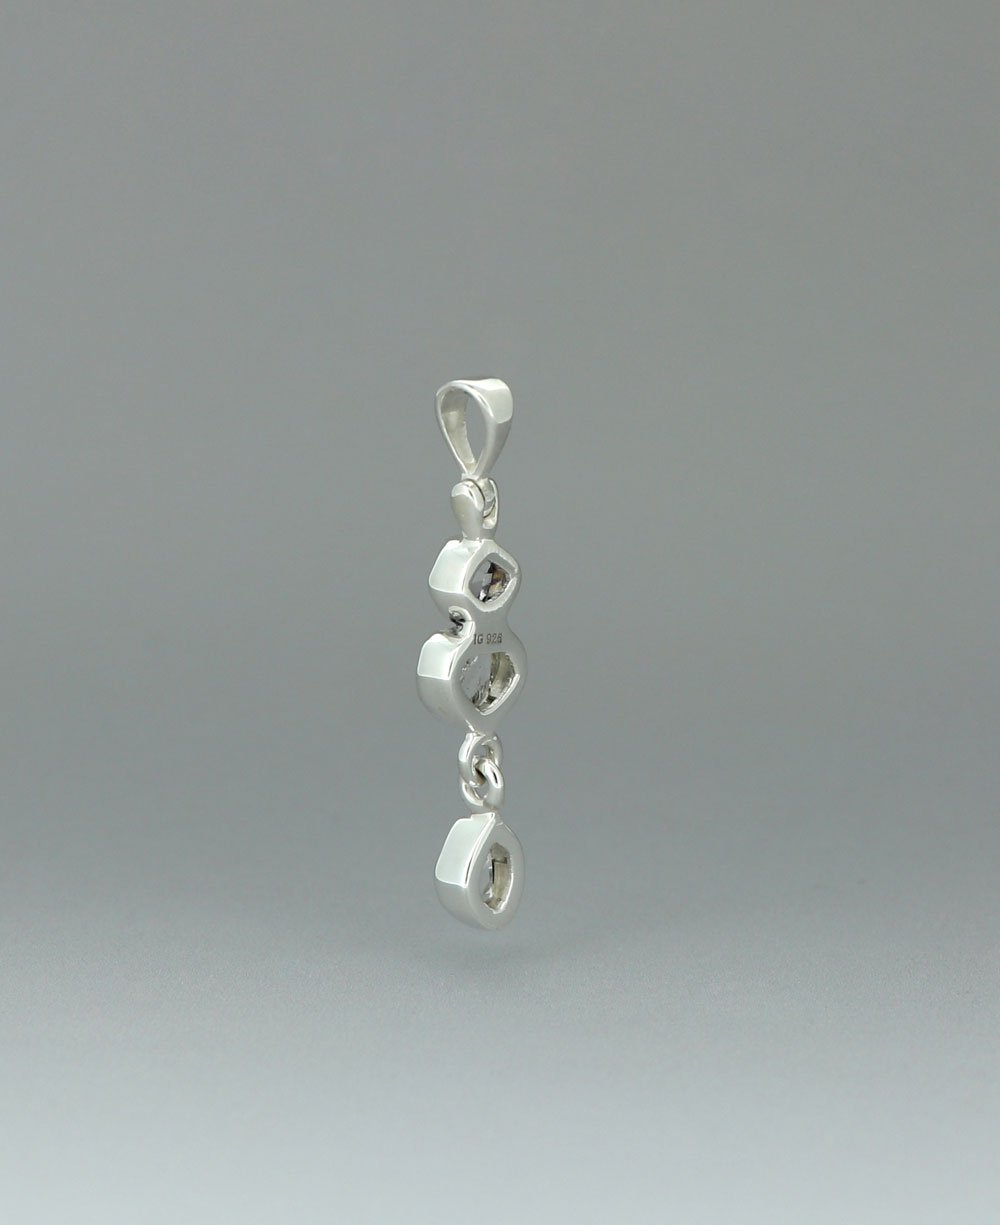 Sterling Silver Herkimer Quartz Triple Stone Pendant - Charms & Pendants